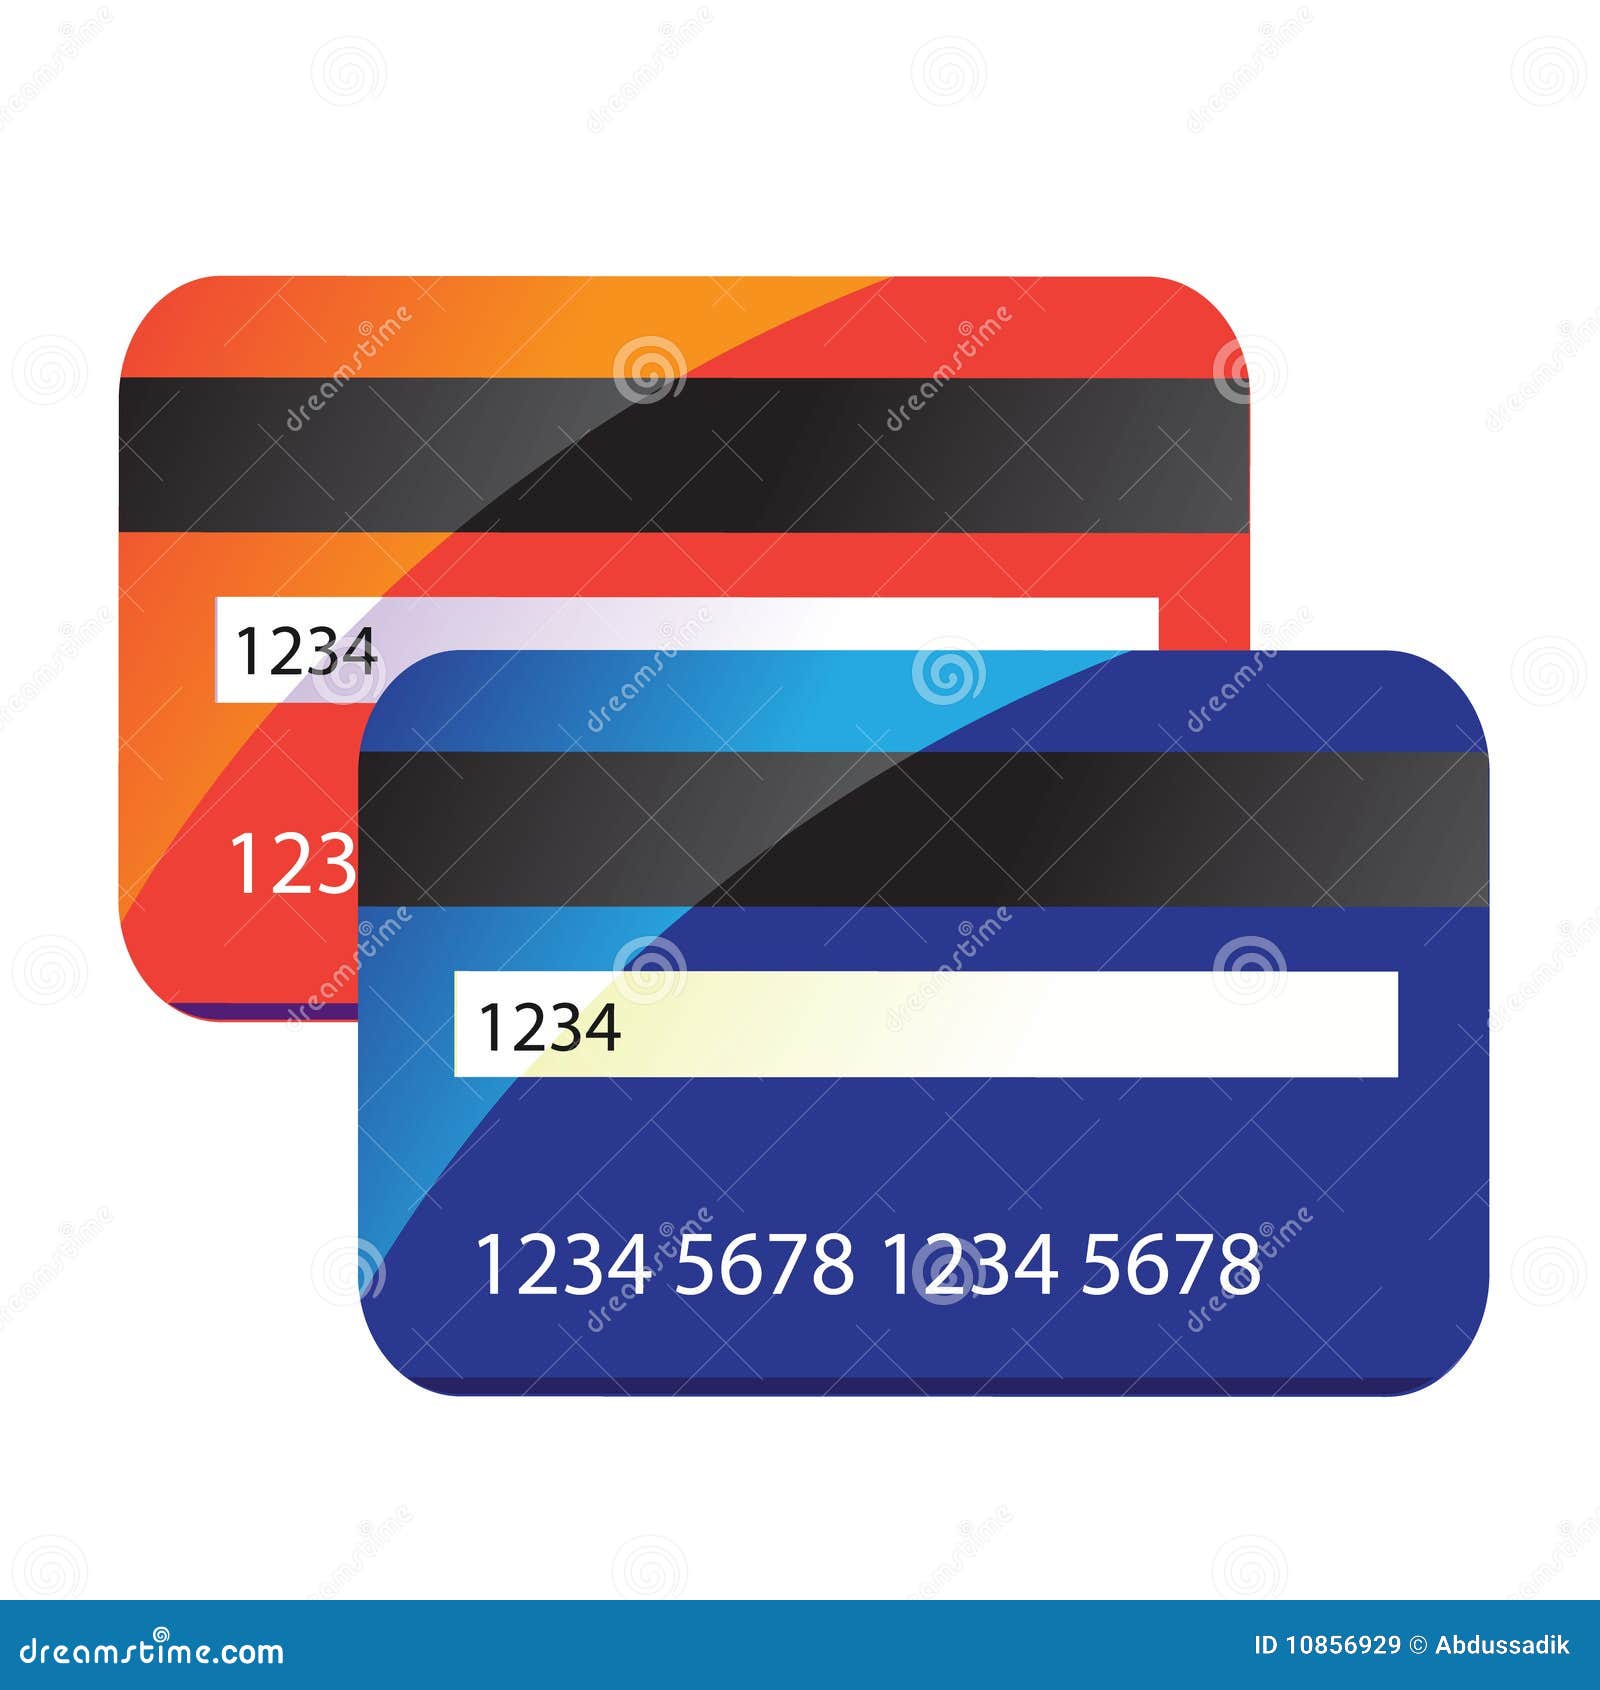 debit card clipart - photo #34